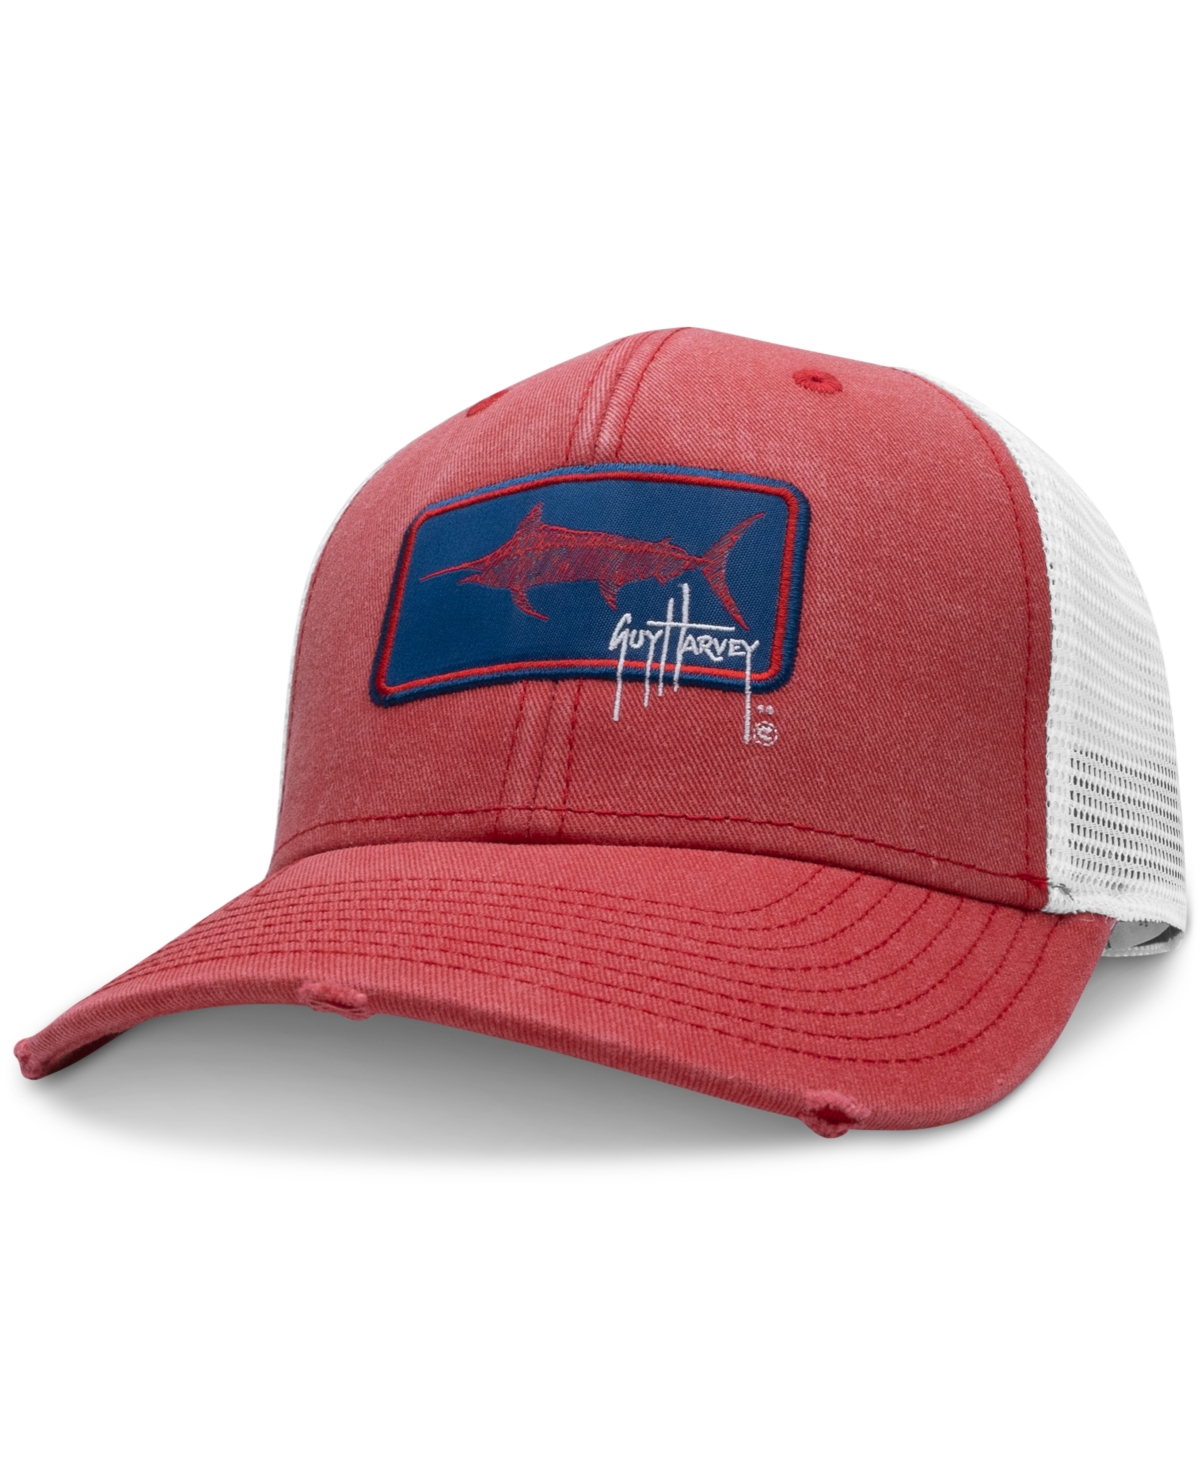 Men's Woven Billfish Patch Distressed Trucker Hat - Red